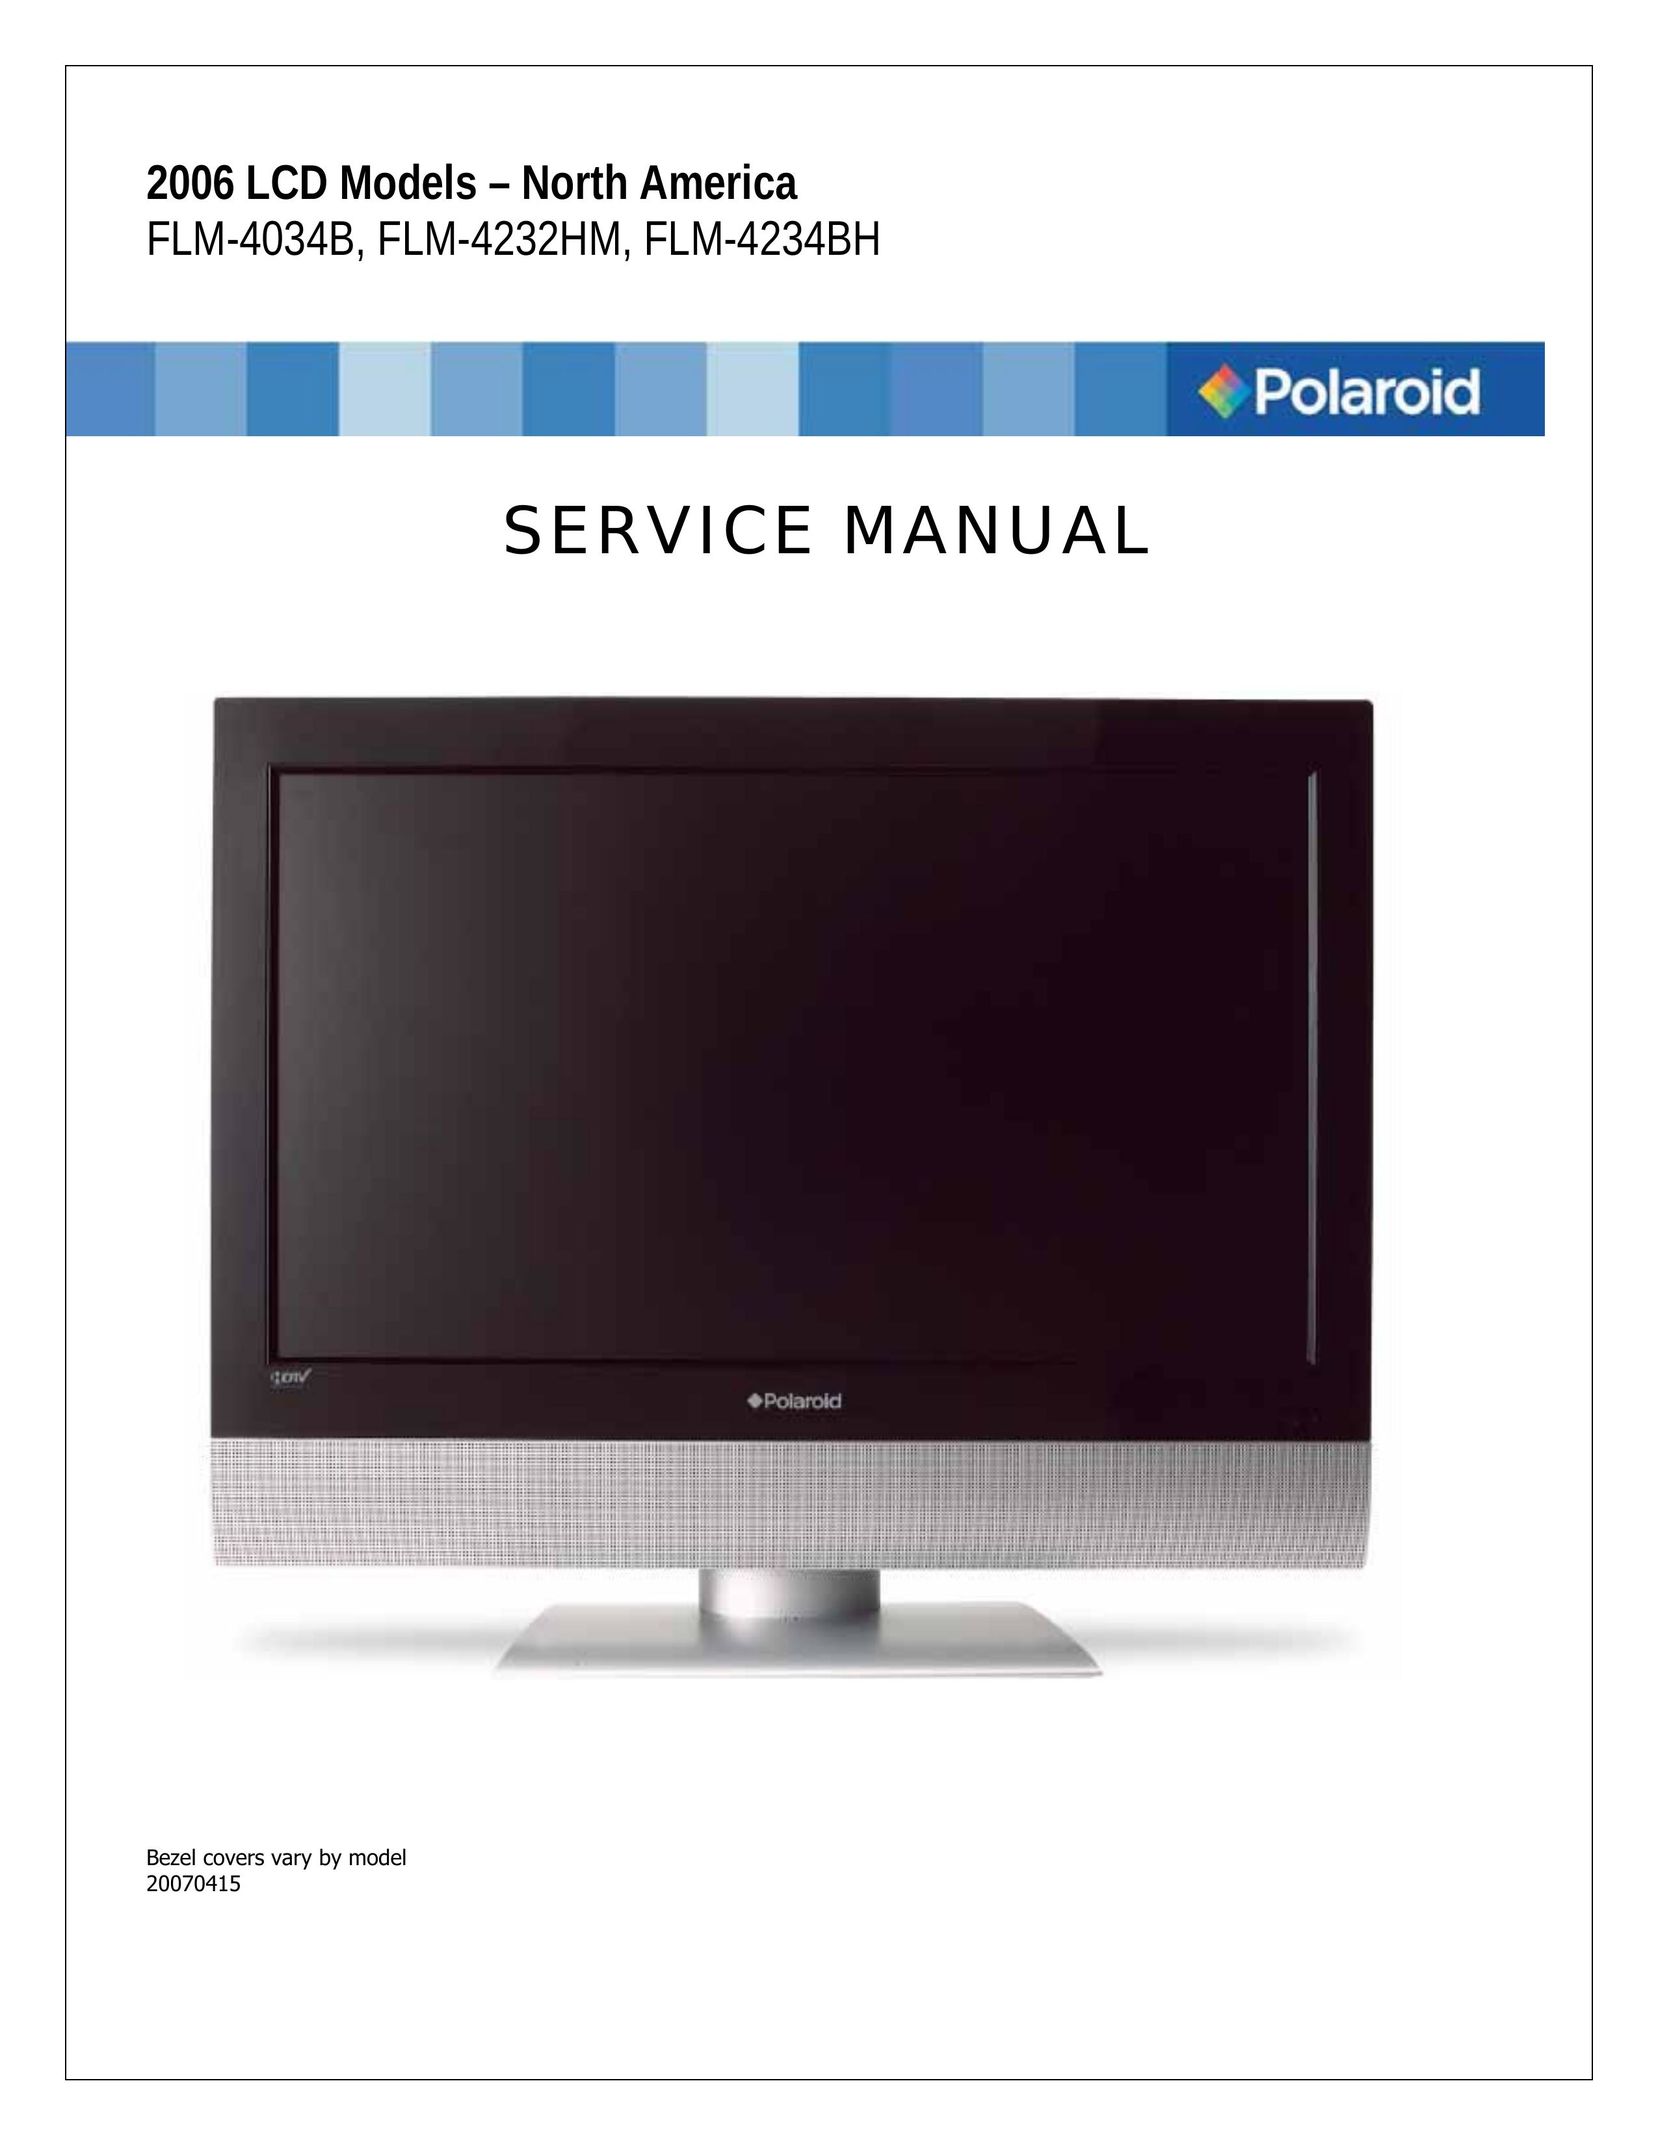 Polaroid FLM-4034B Flat Panel Television User Manual